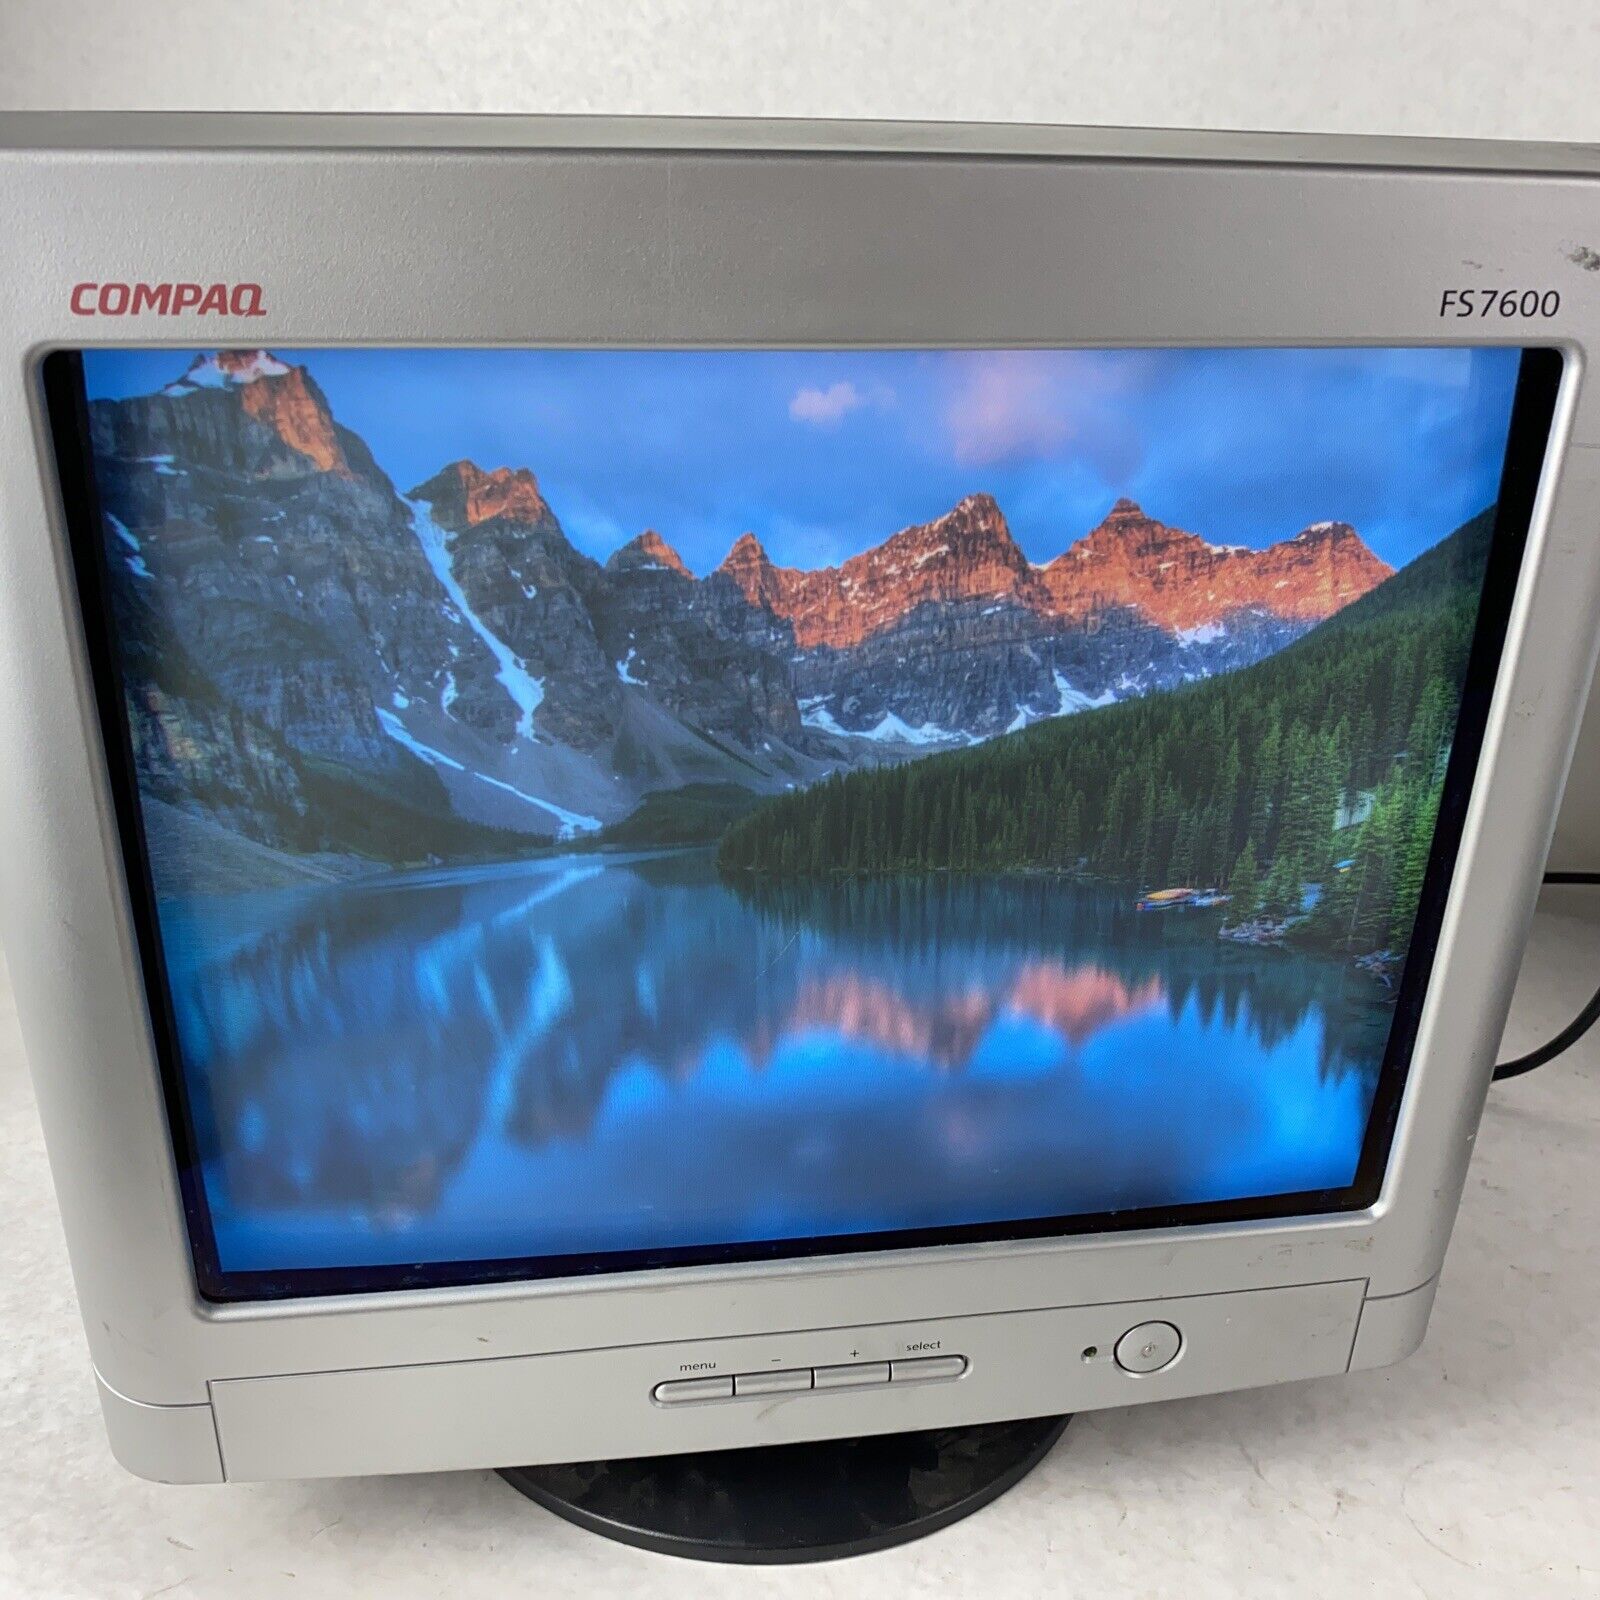 HP Compaq FS7600 17" Flat Screen CRT Monitor Display -Tested & Working